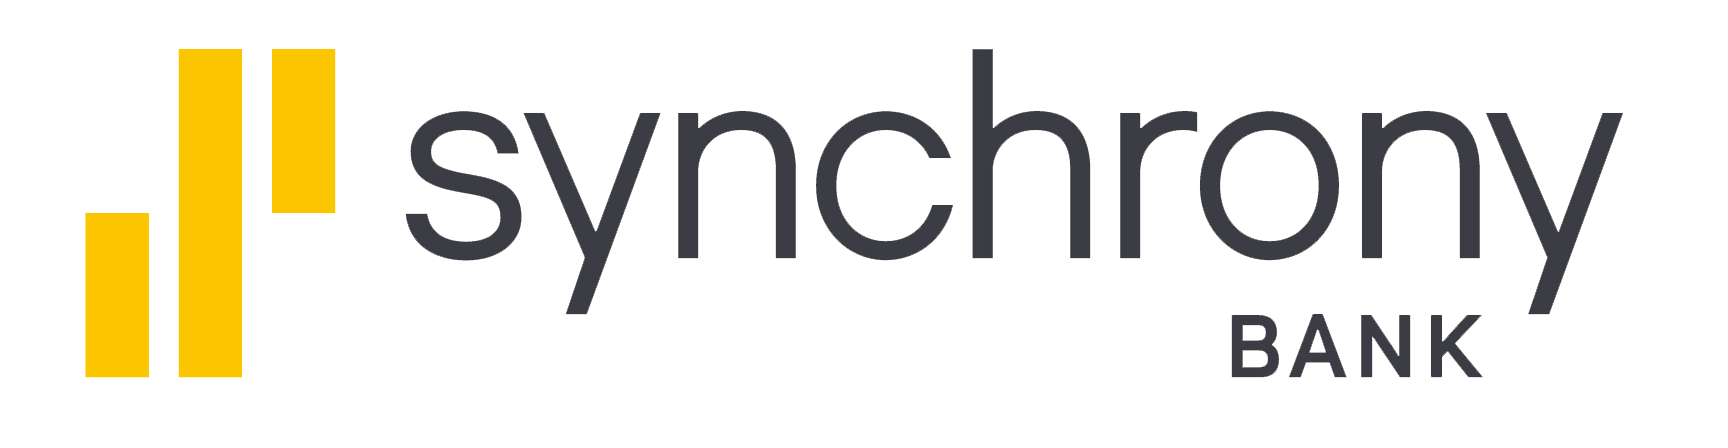 synchrony-bank-logo-financing-dashing-dans-plumbing.png